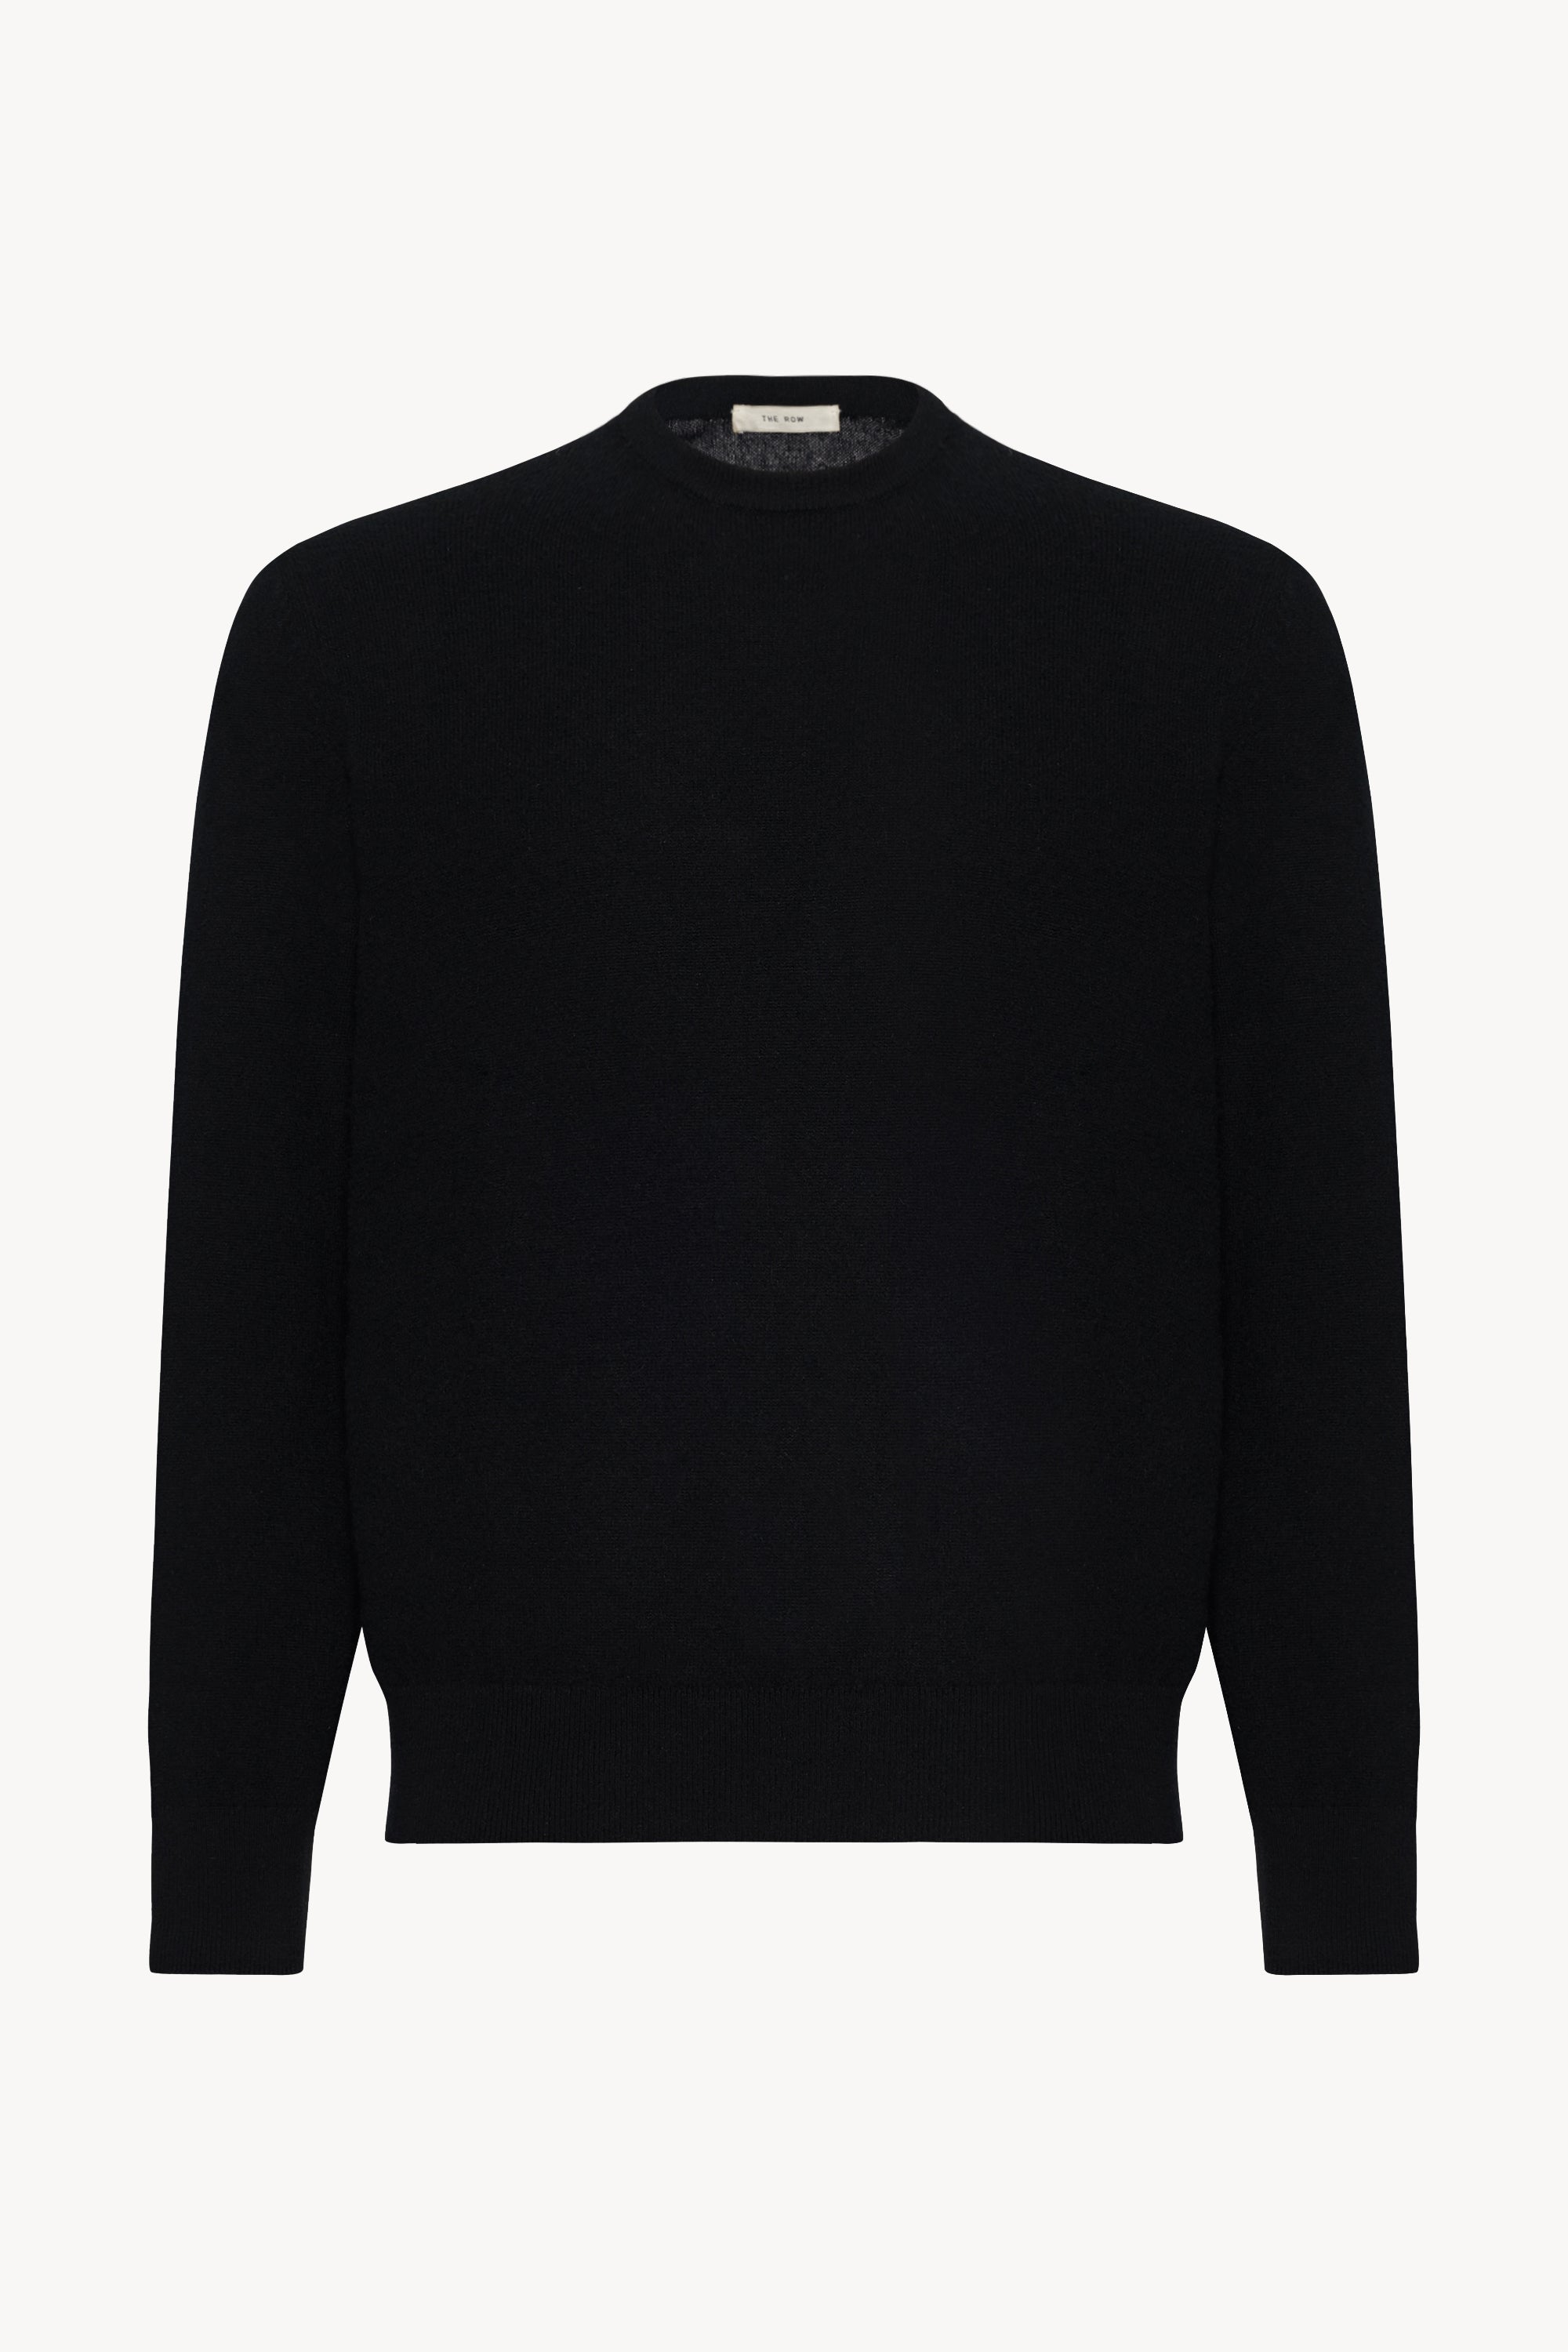 Benji Sweater Black in Cashmere – The Row